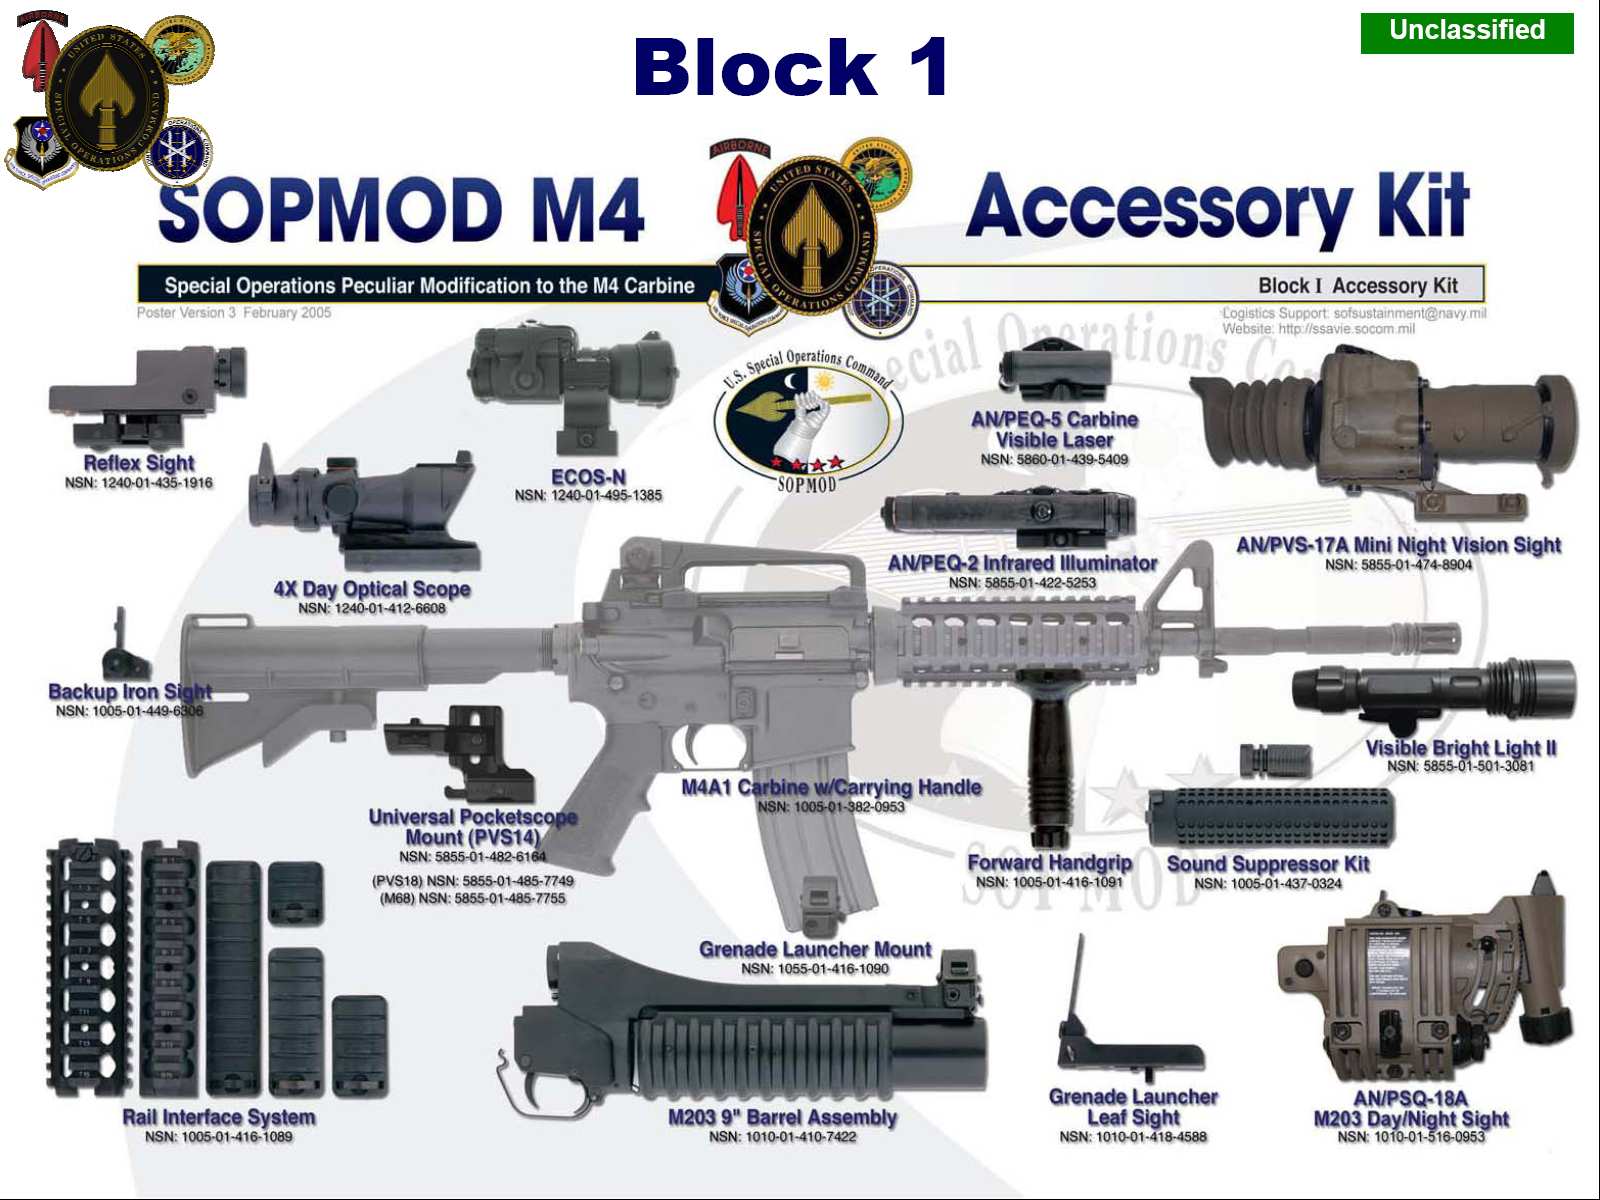 m4a1, Weapon, Gun, Military, Rifle, Police, Poster Wallpaper